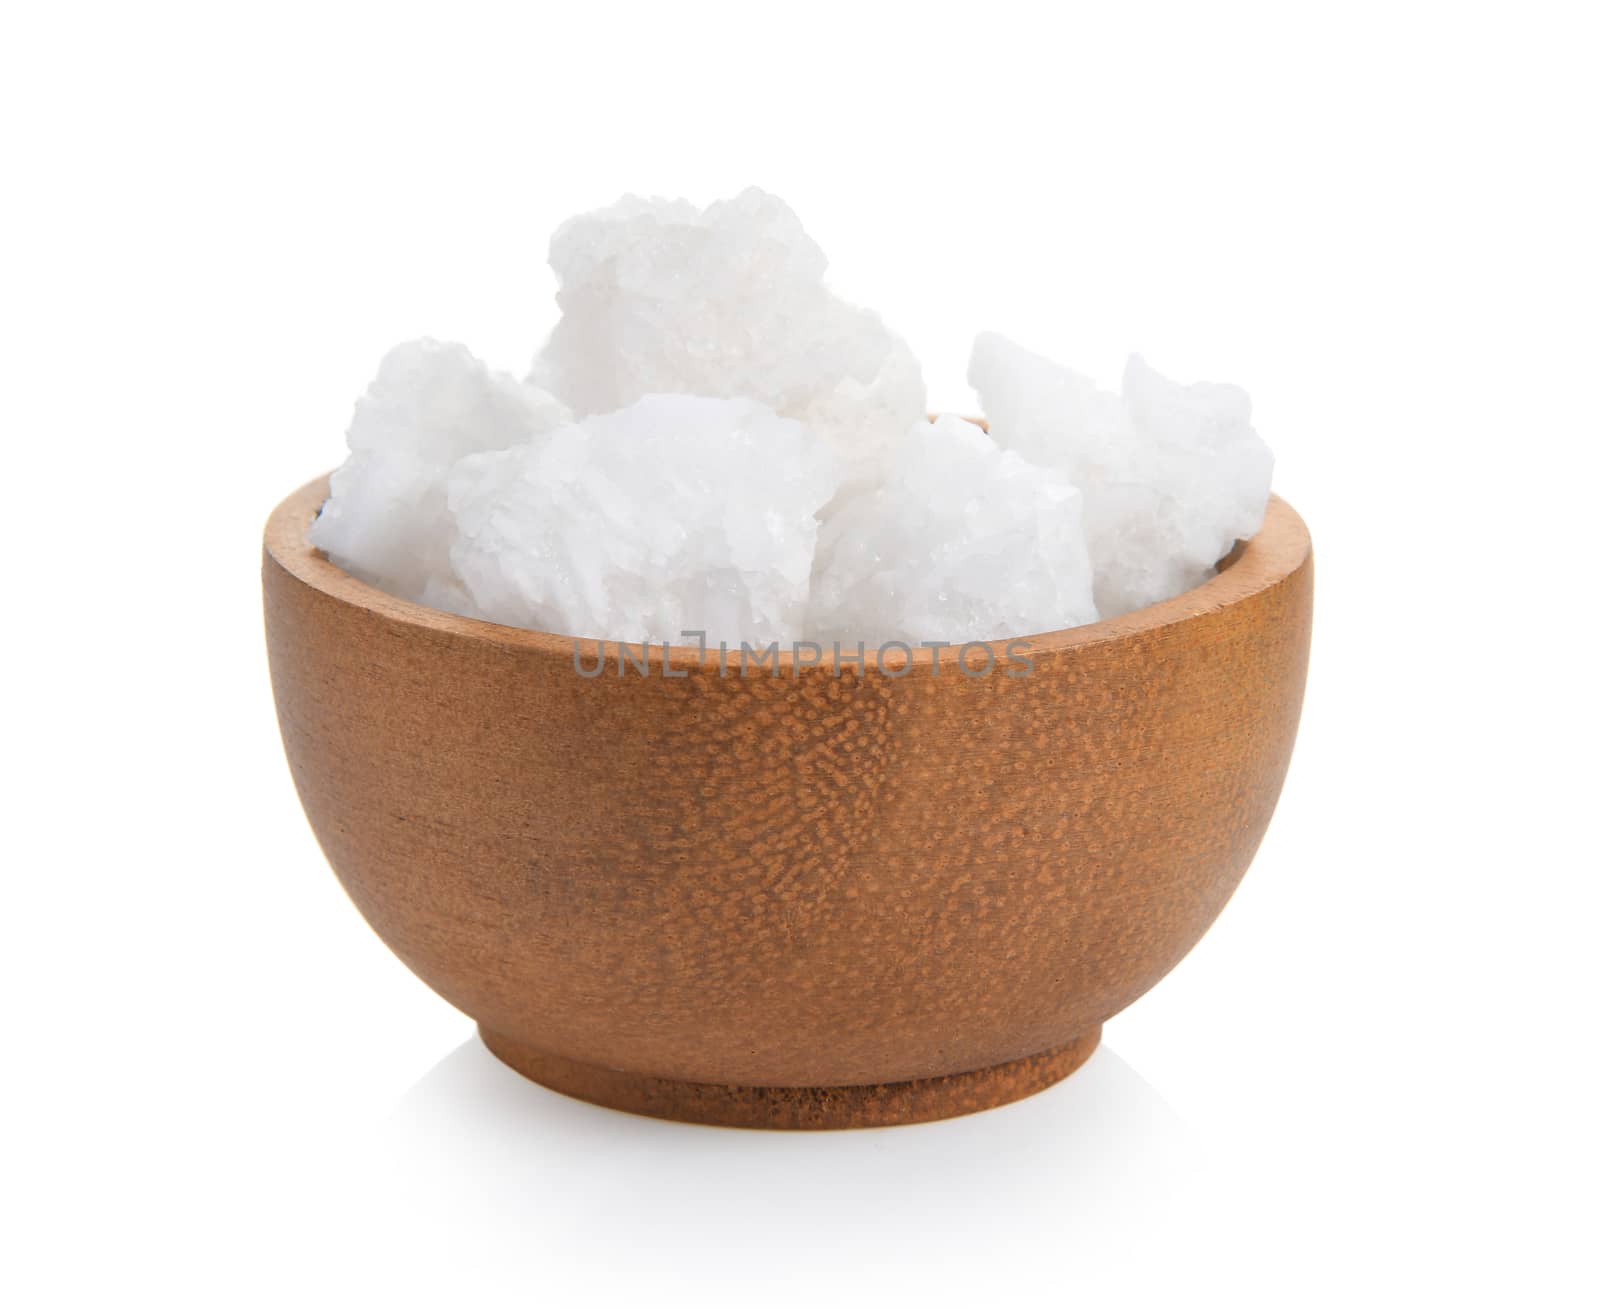 salt in wood bowl on white background